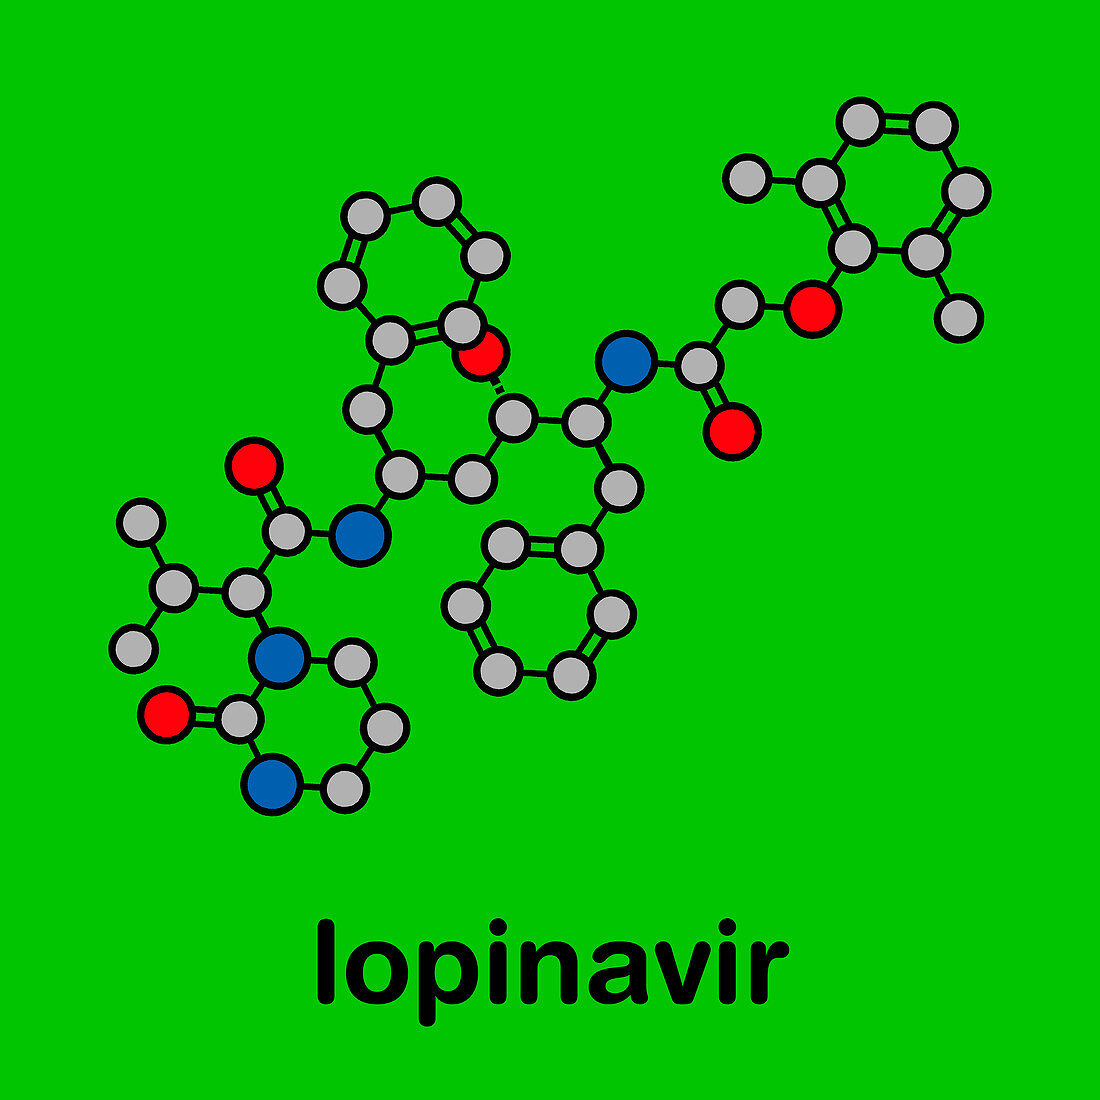 Lopinavir HIV drug, molecular model